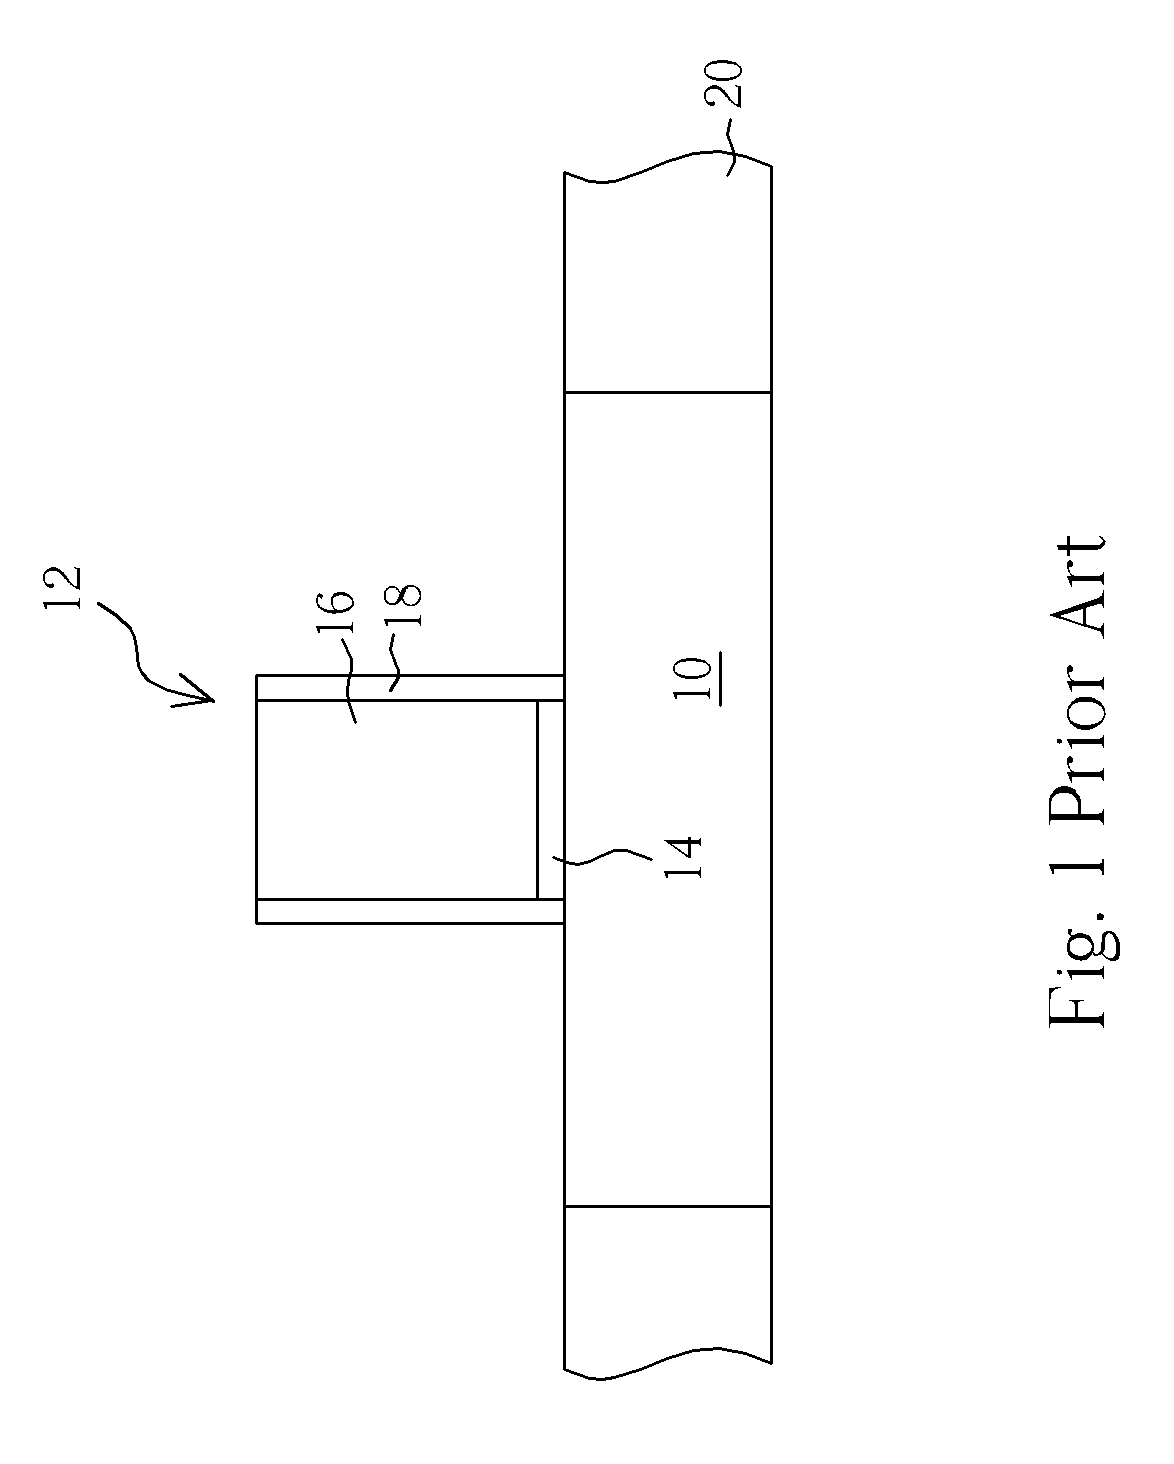 Method for fabricating an NMOS transistor